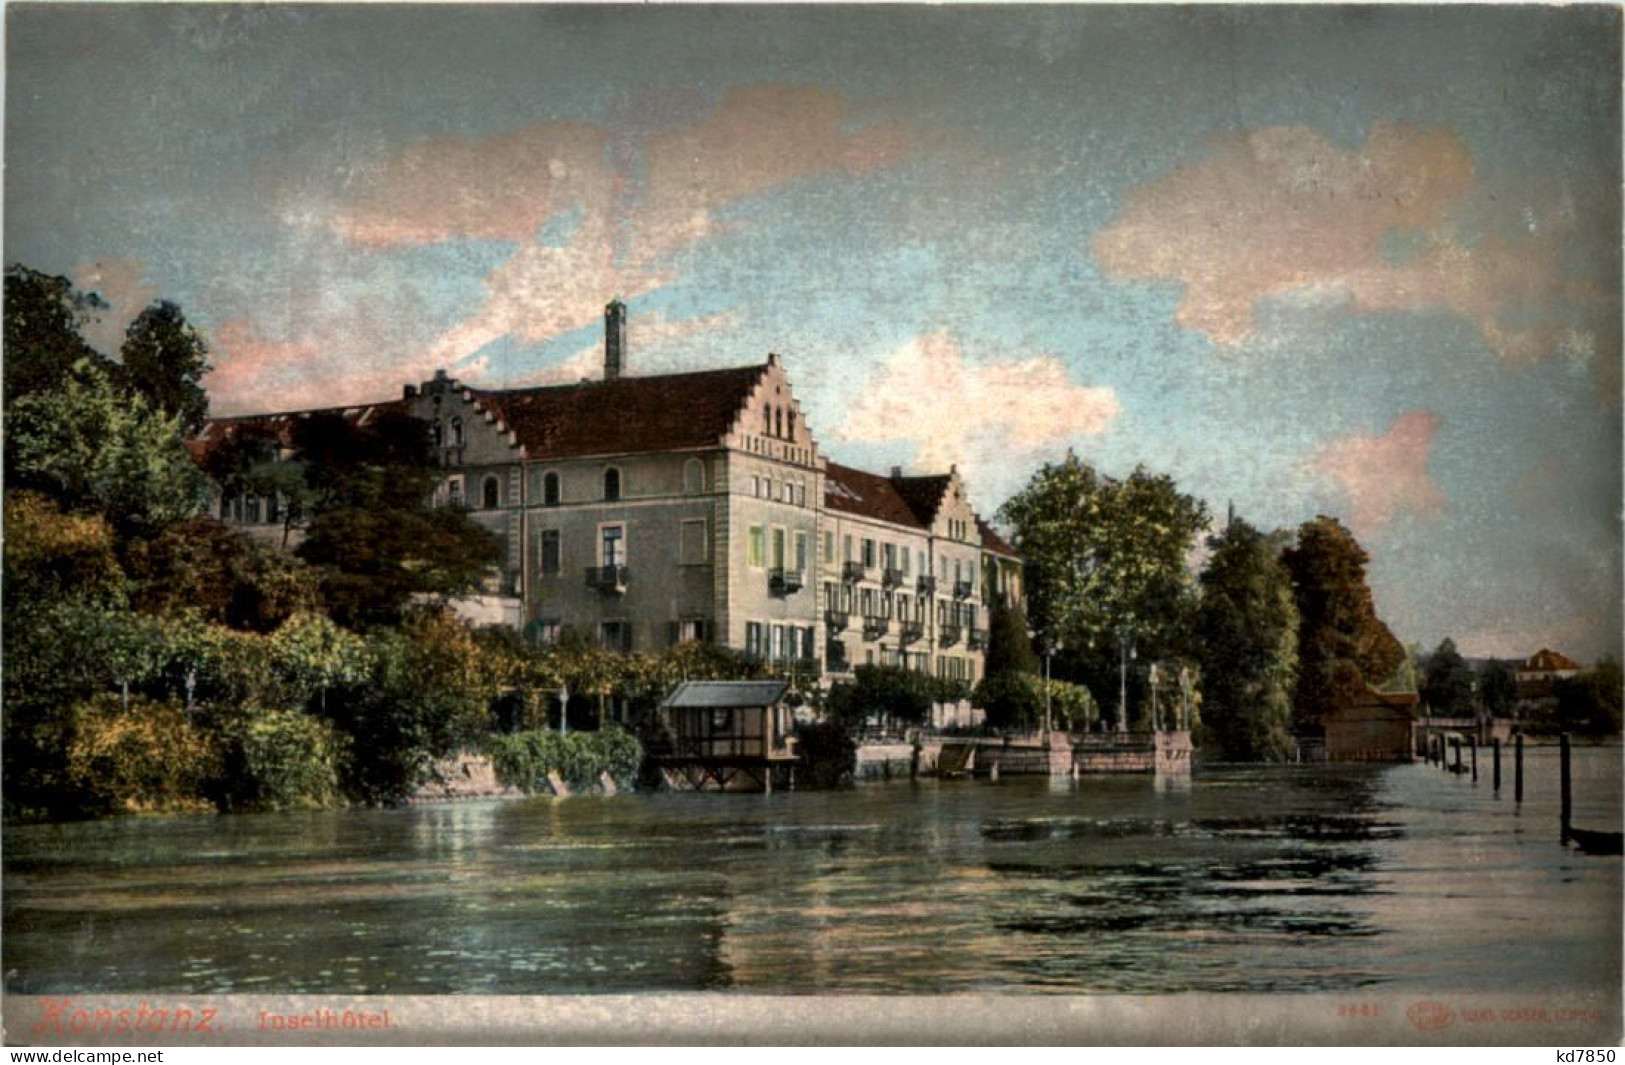 Konstanz, Inselhotel - Konstanz